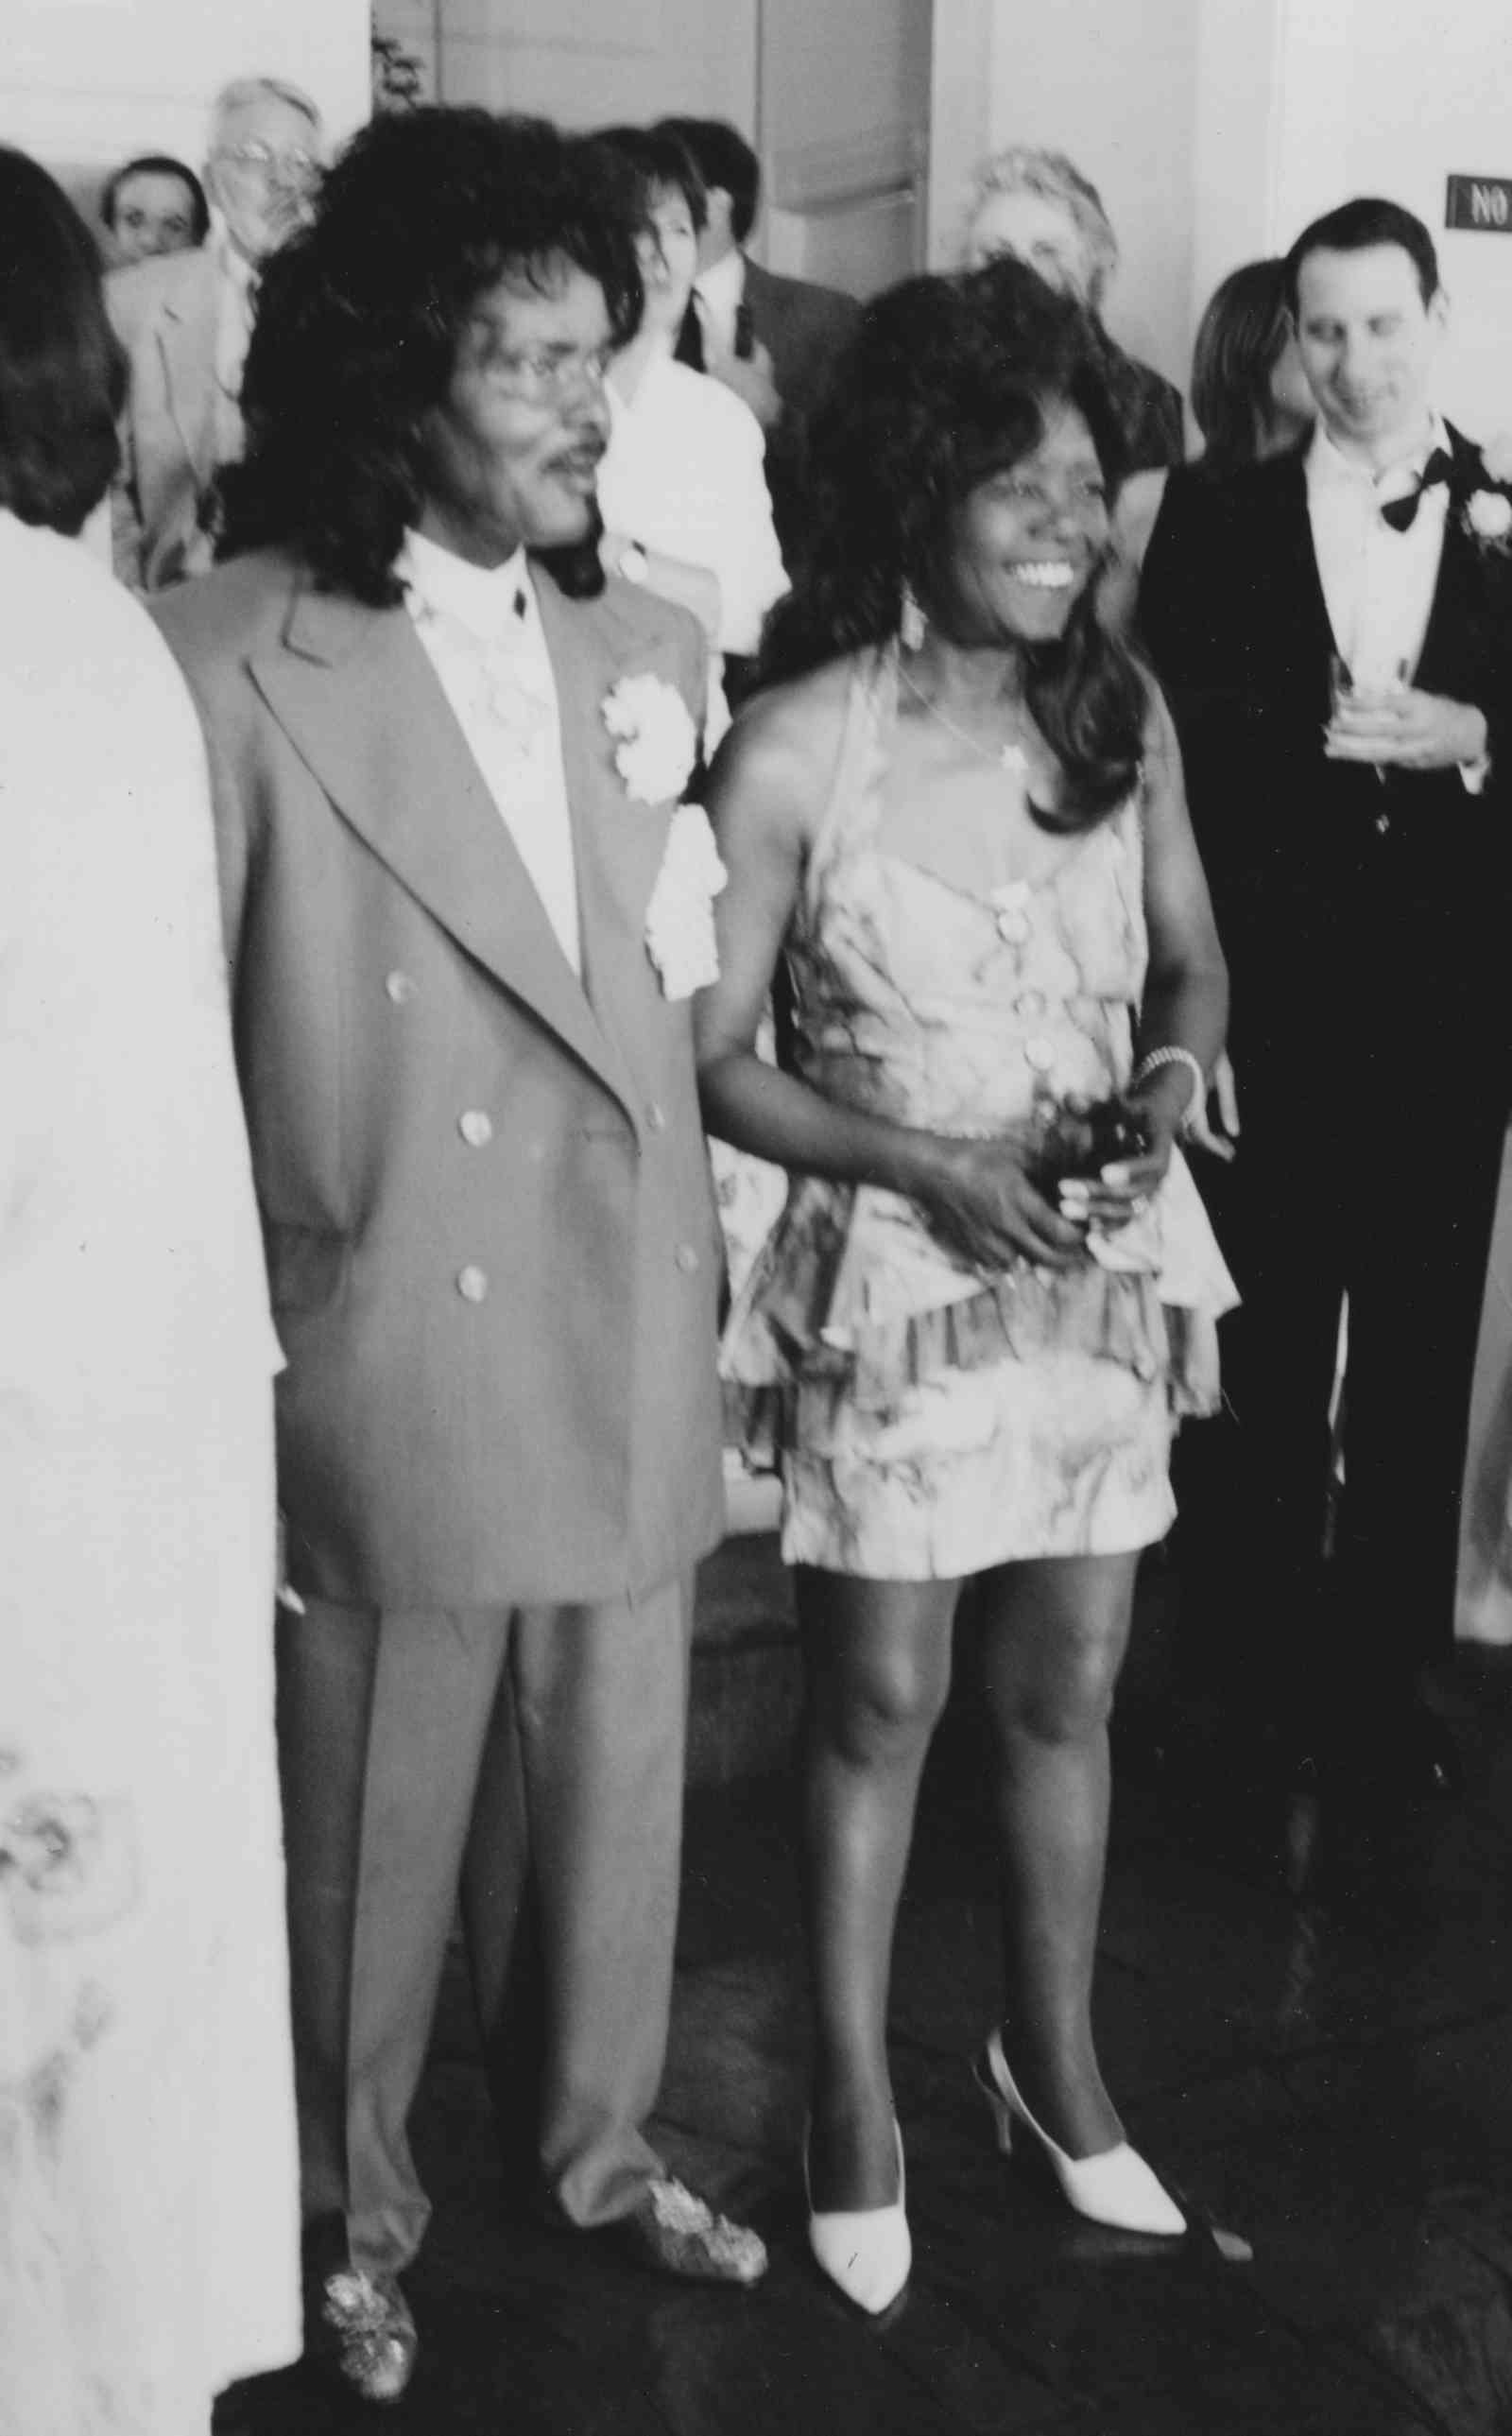 Ernie & Antoinette K-Doe at a wedding